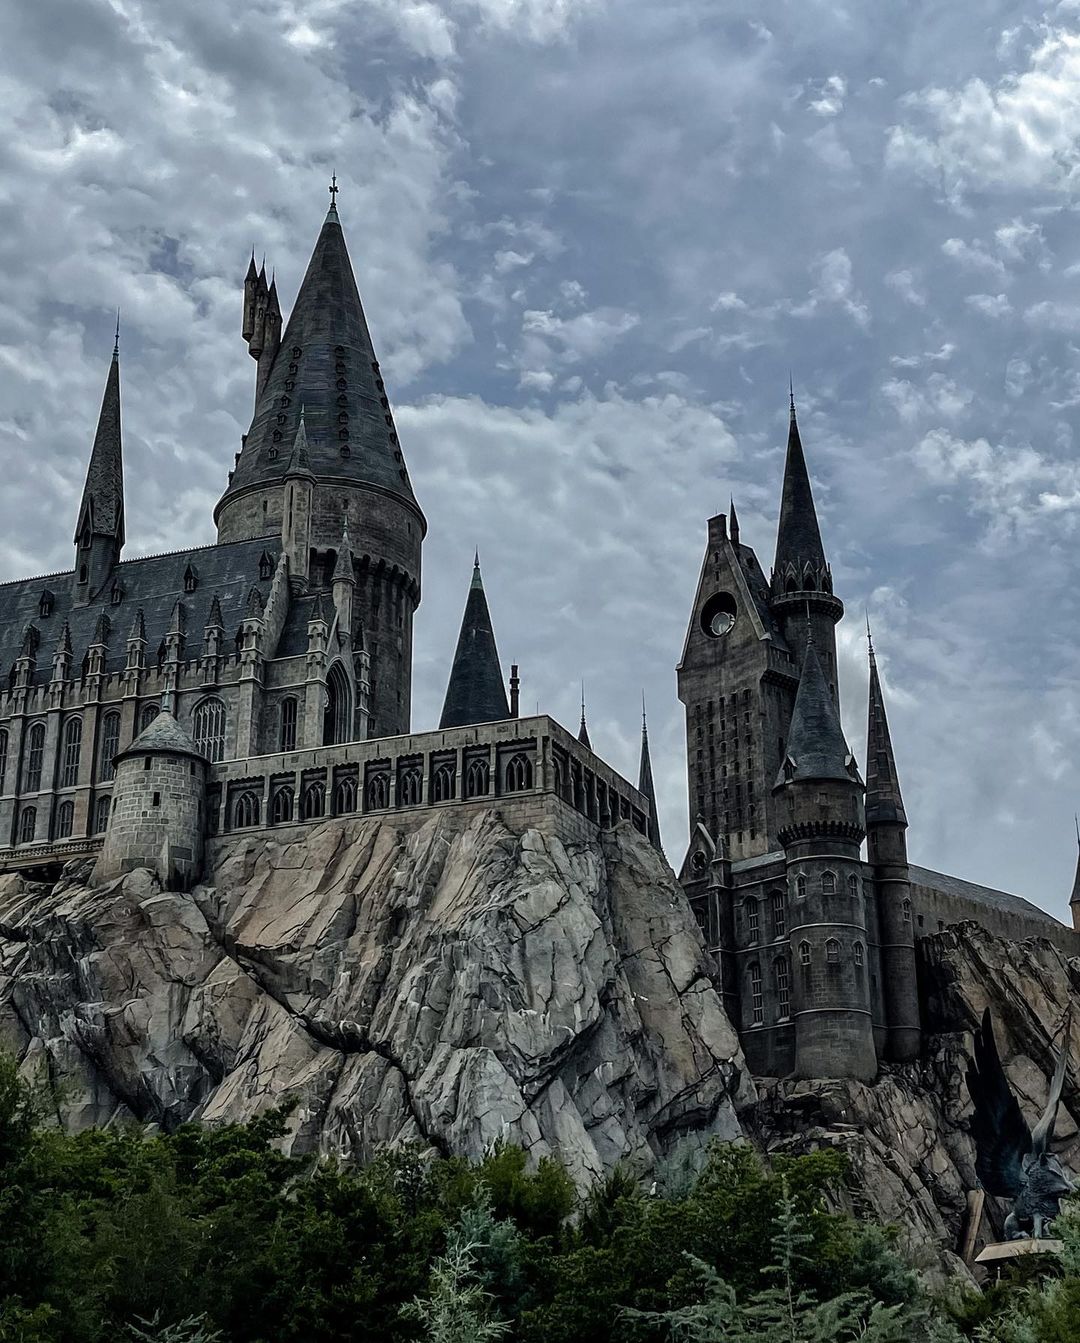 Hogwarts Castle at Islands of Adventure